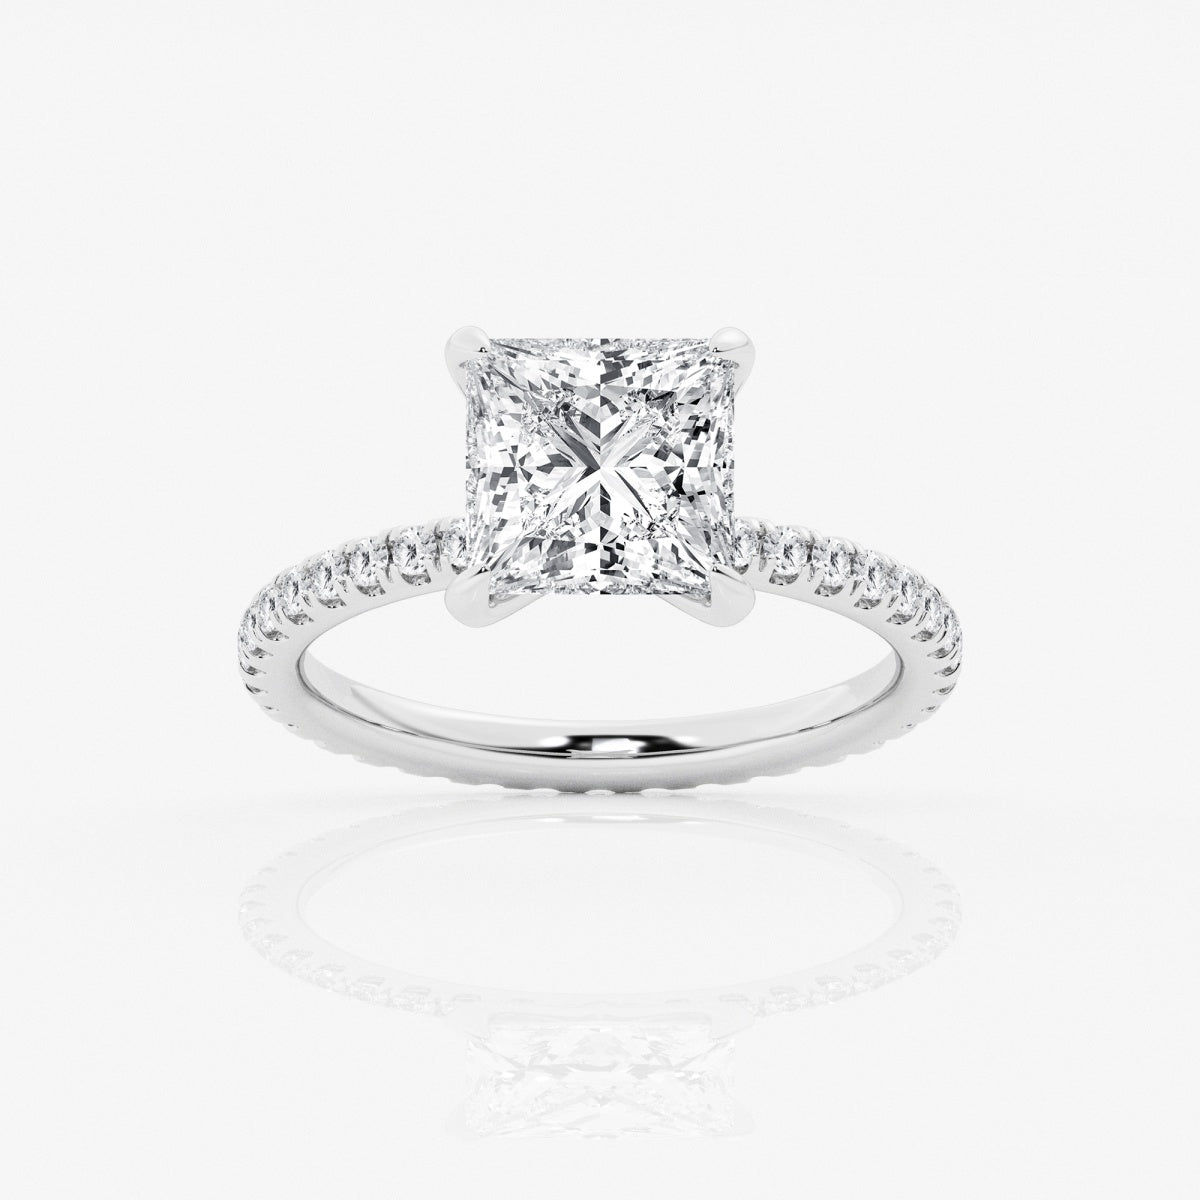 3 Carat Princess Cut Moissanite Diamond Engagement Ring